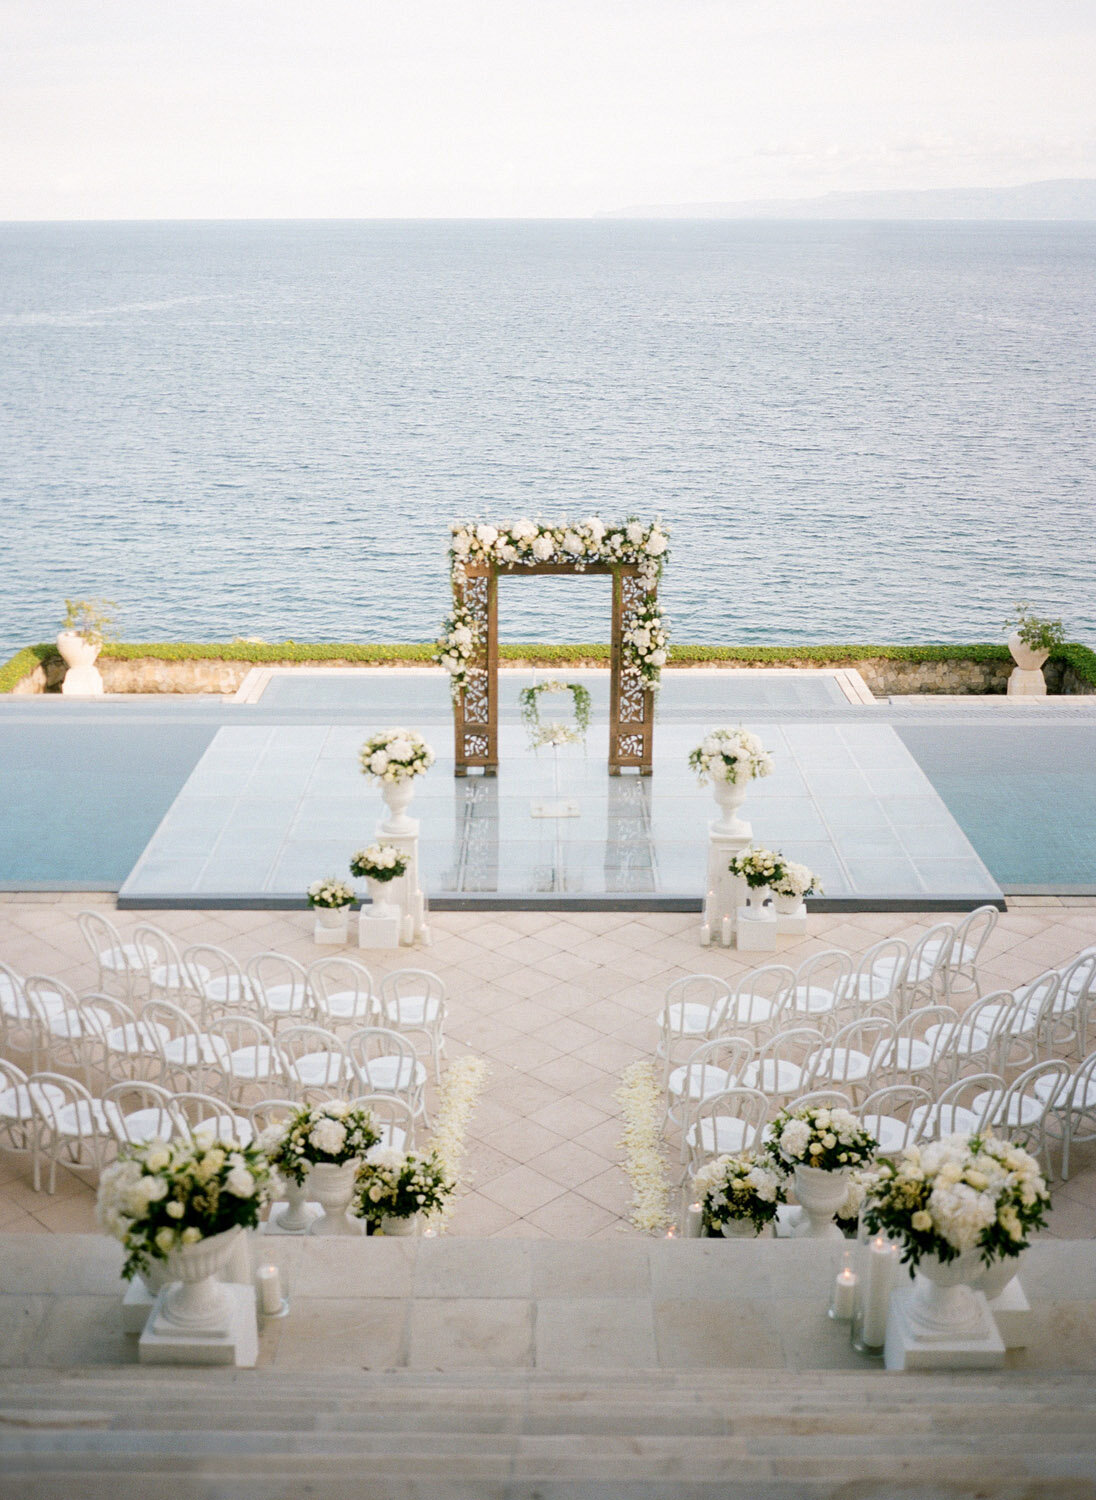 destination-wedding-bali-amankila-ceremony-over-pool-platform--altar-white-chairs-floral-strucutre